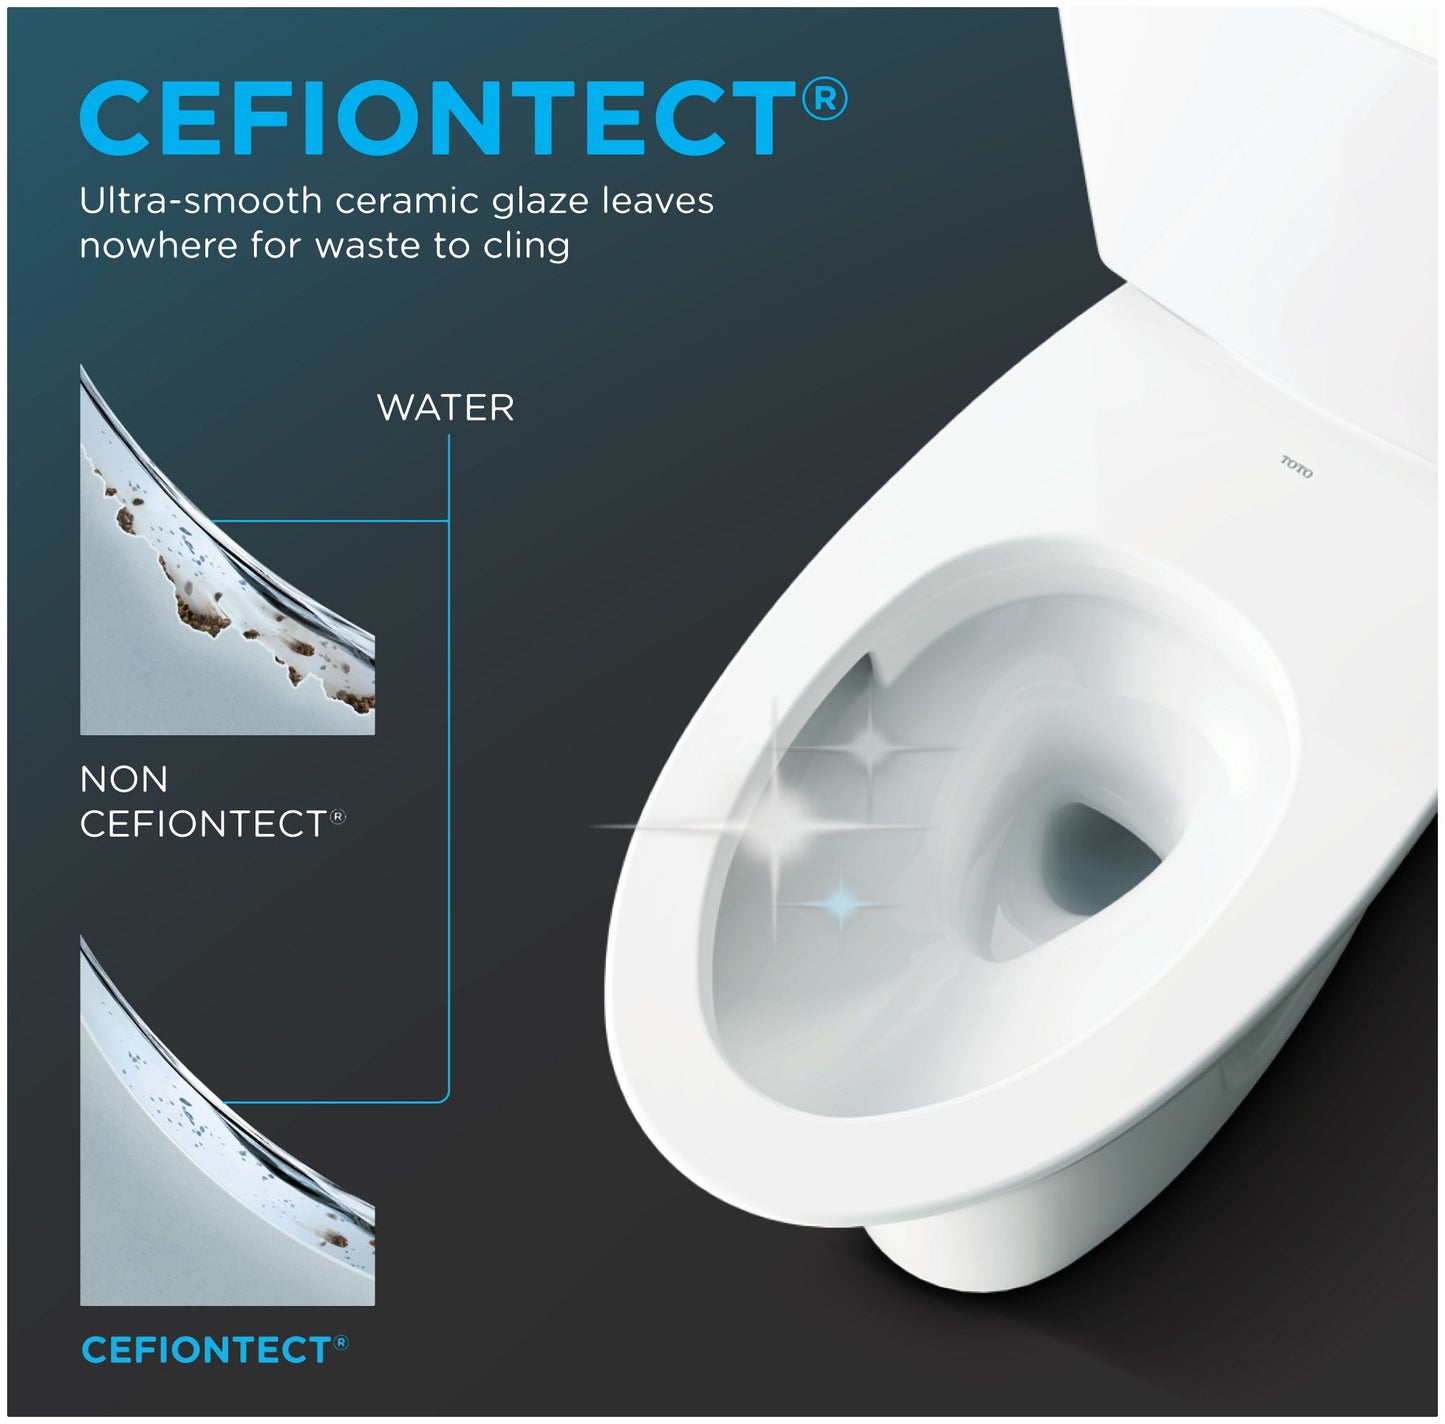 MW6423074CUFG#01 - Nexus 1G Washlet+ C2 One-Piece Toilet - 1.0 GPF